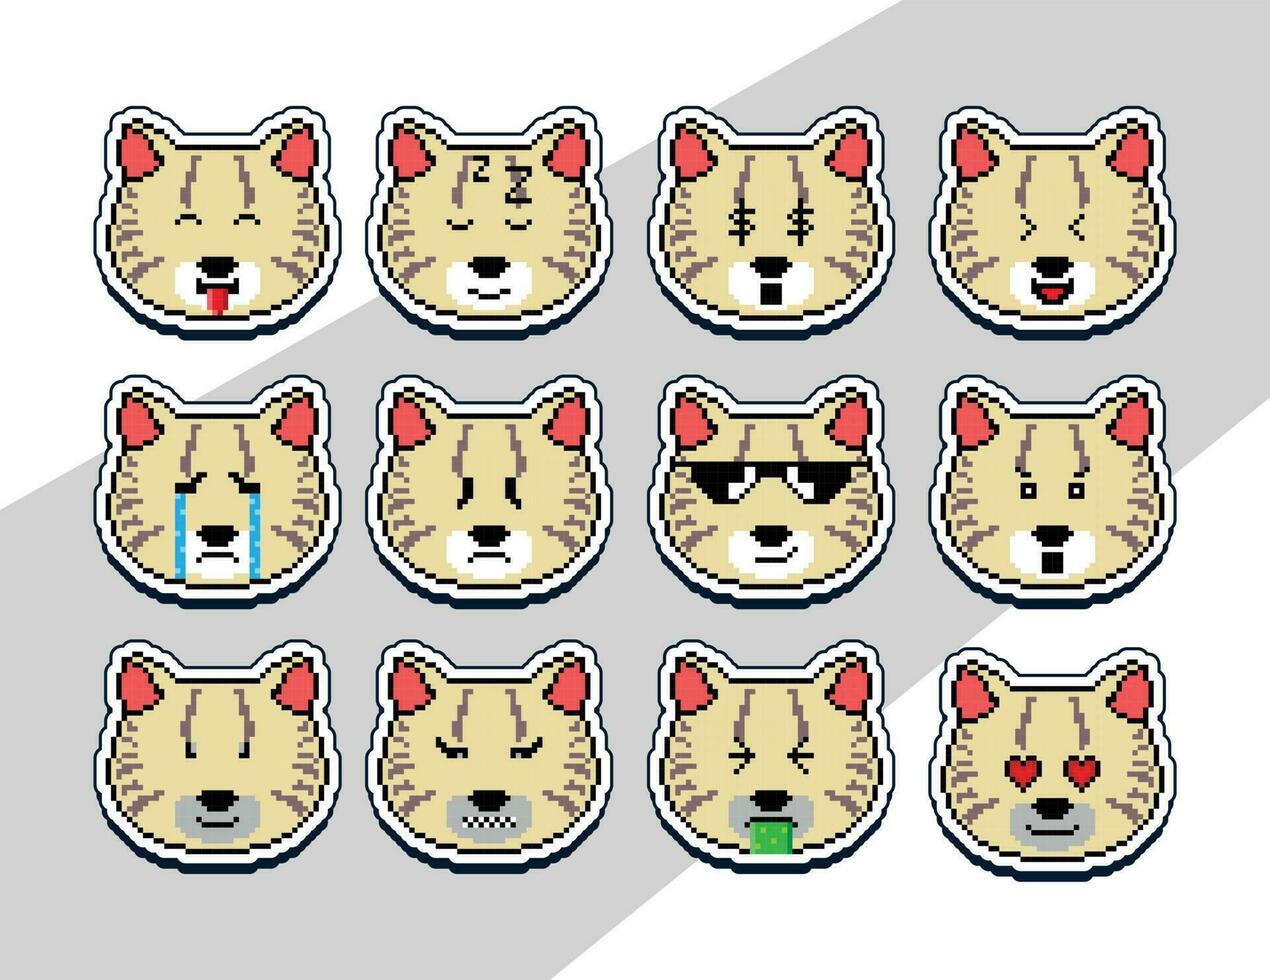 pixel arte gato face emoji adesivo. pixel adesivo Projeto vetor